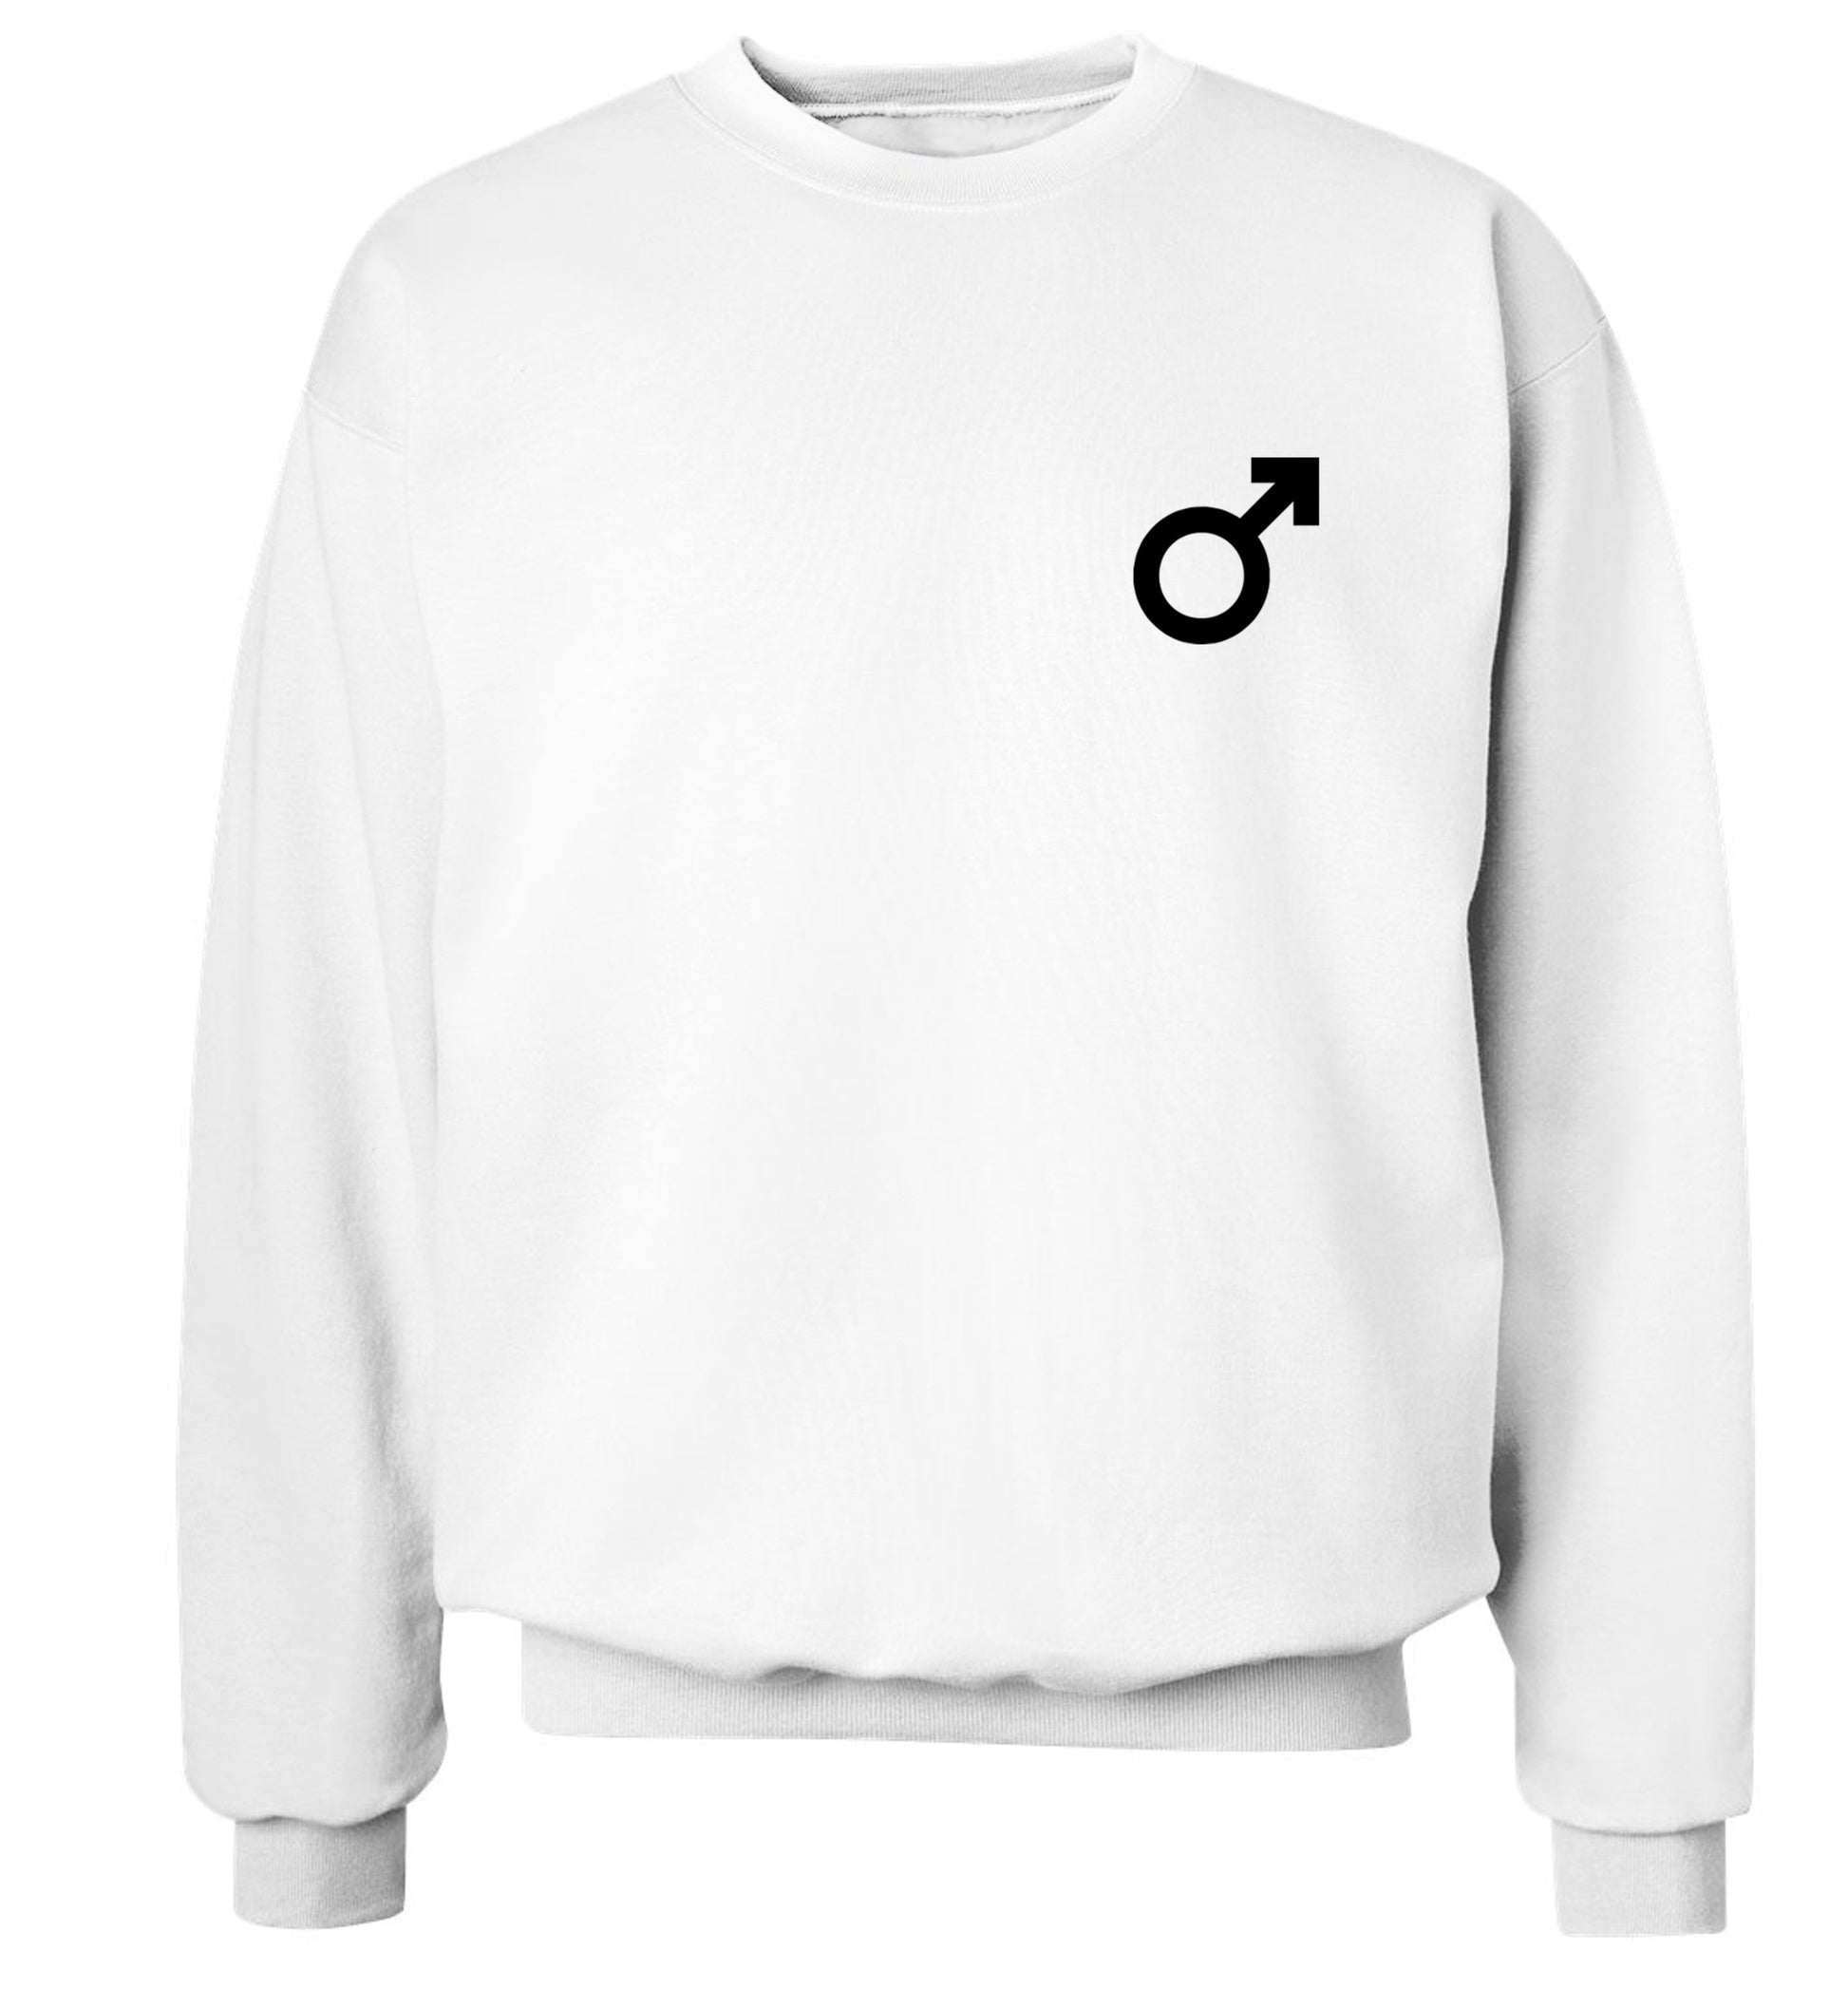 Male symbol pocket Adult's unisex white Sweater 2XL